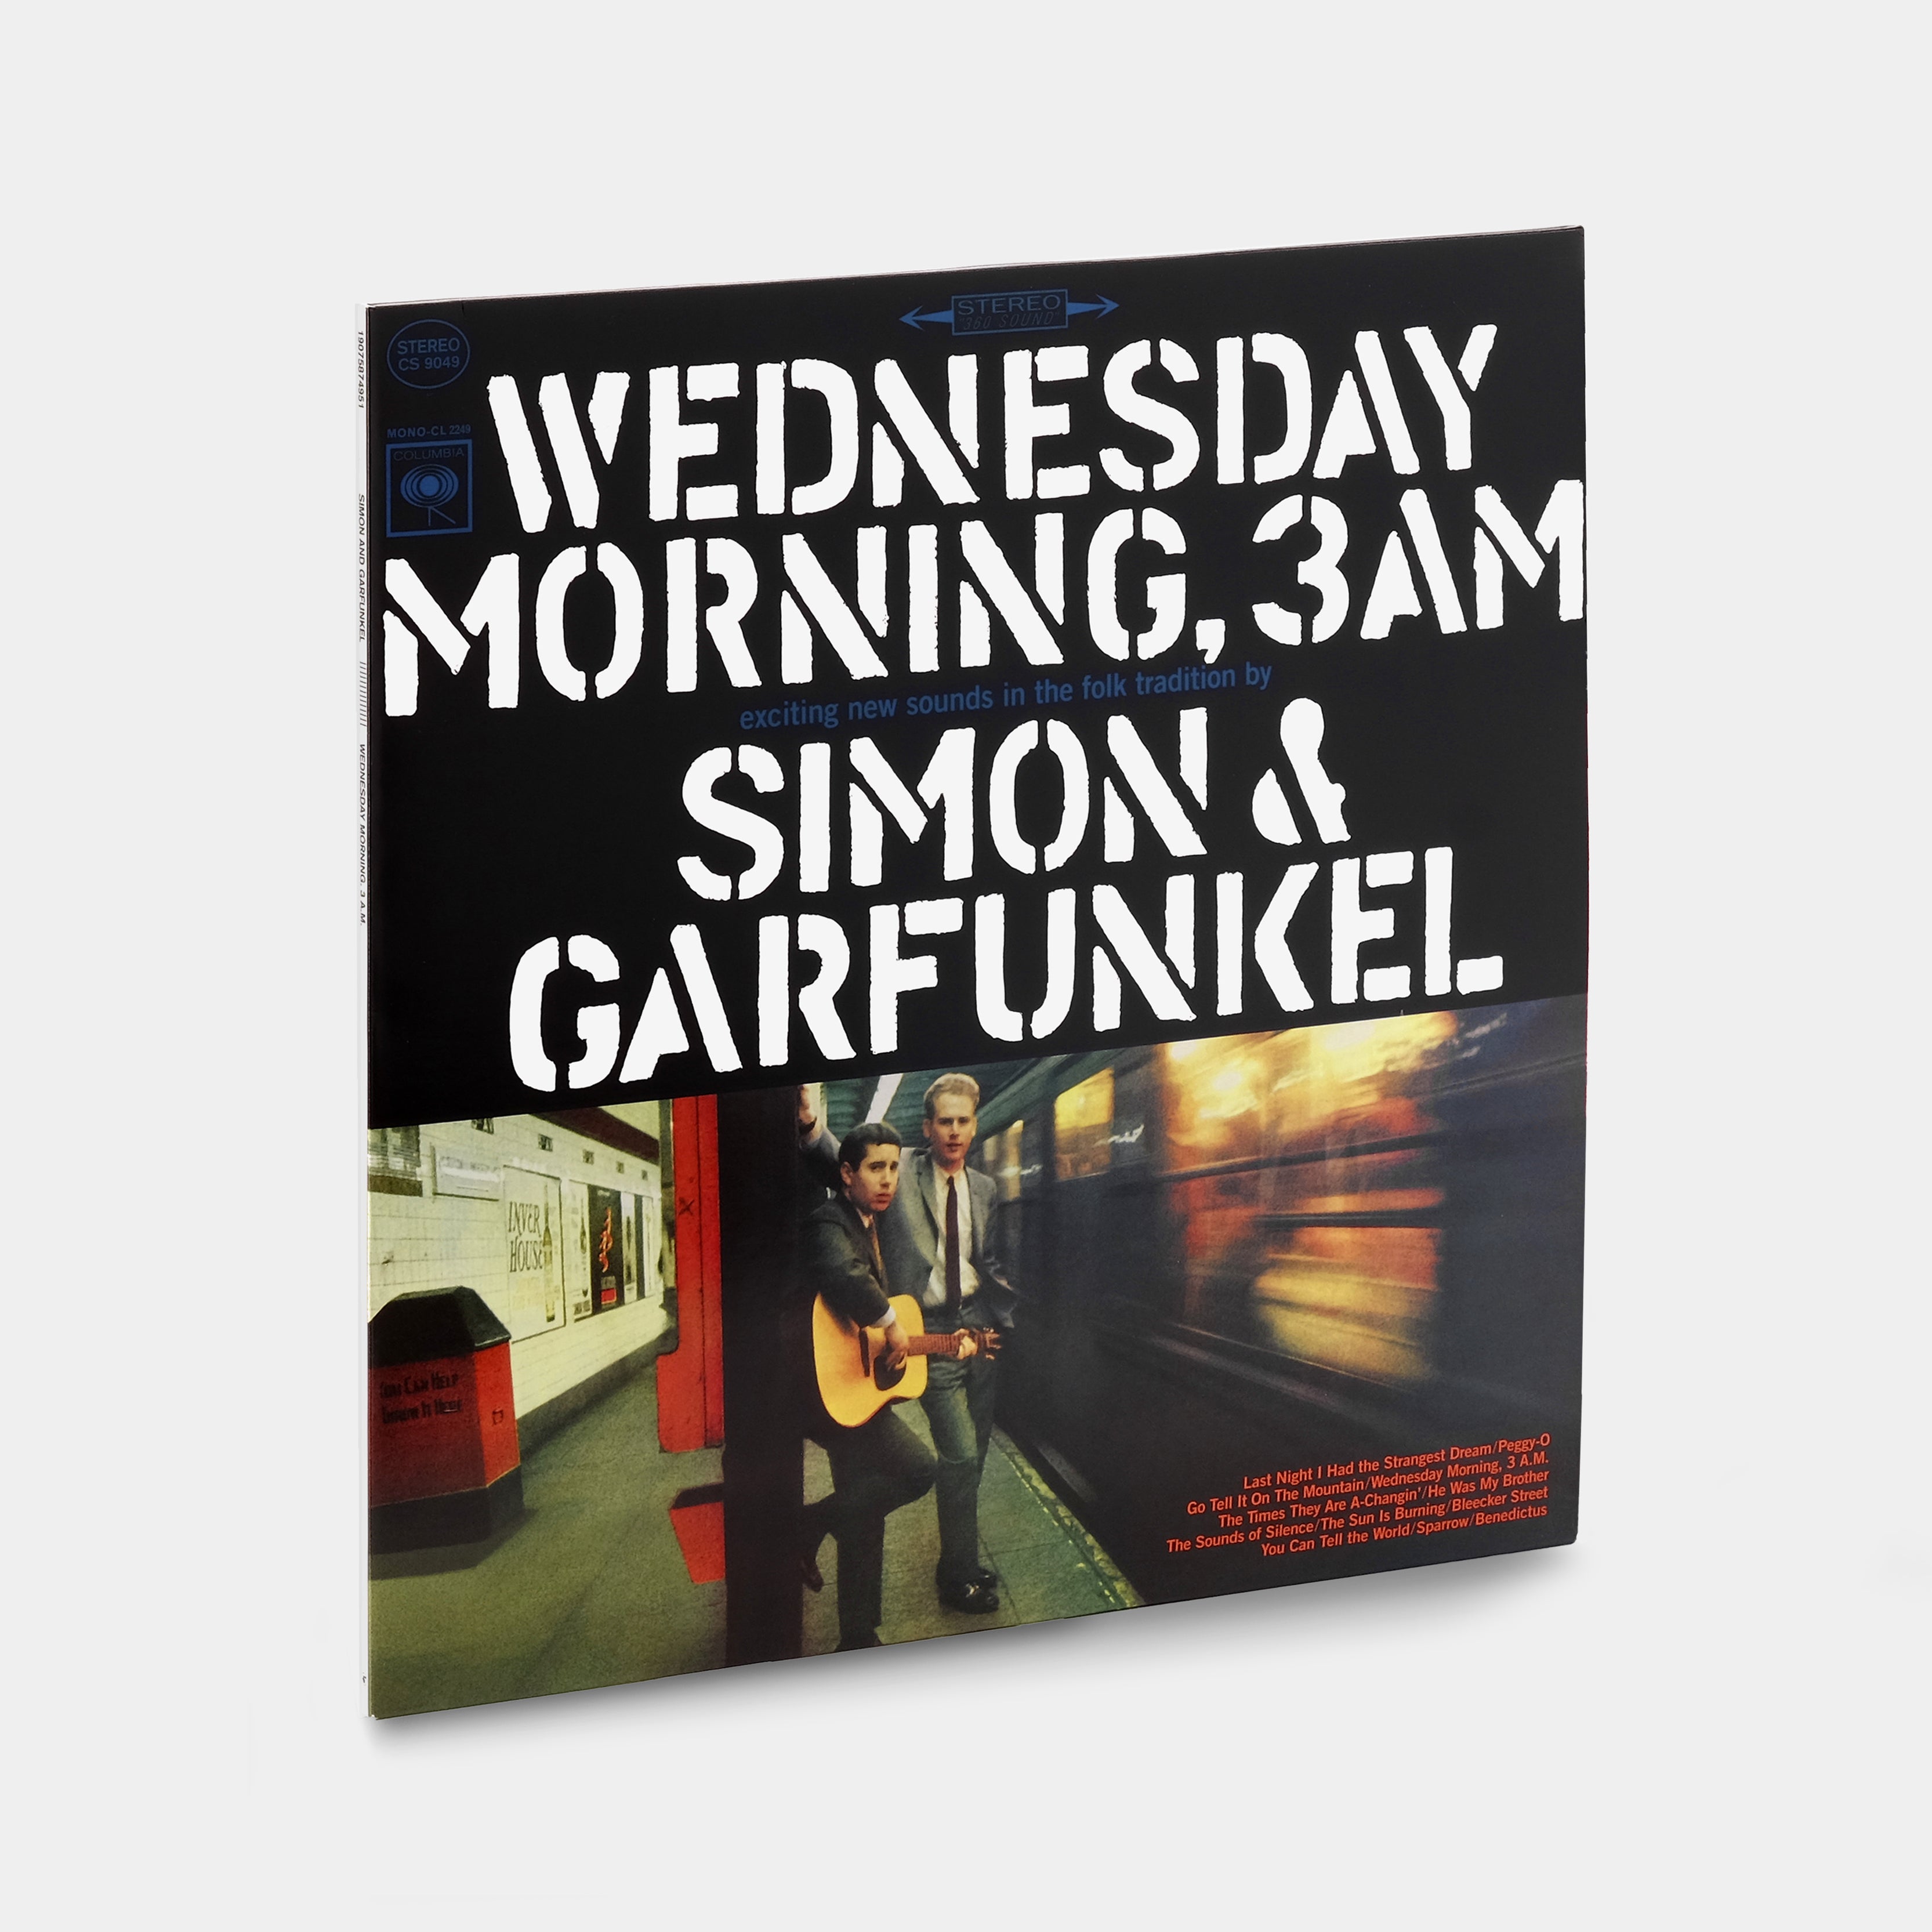 Simon & Garfunkel - Wednesday Morning, 3 A.M. LP Vinyl Record